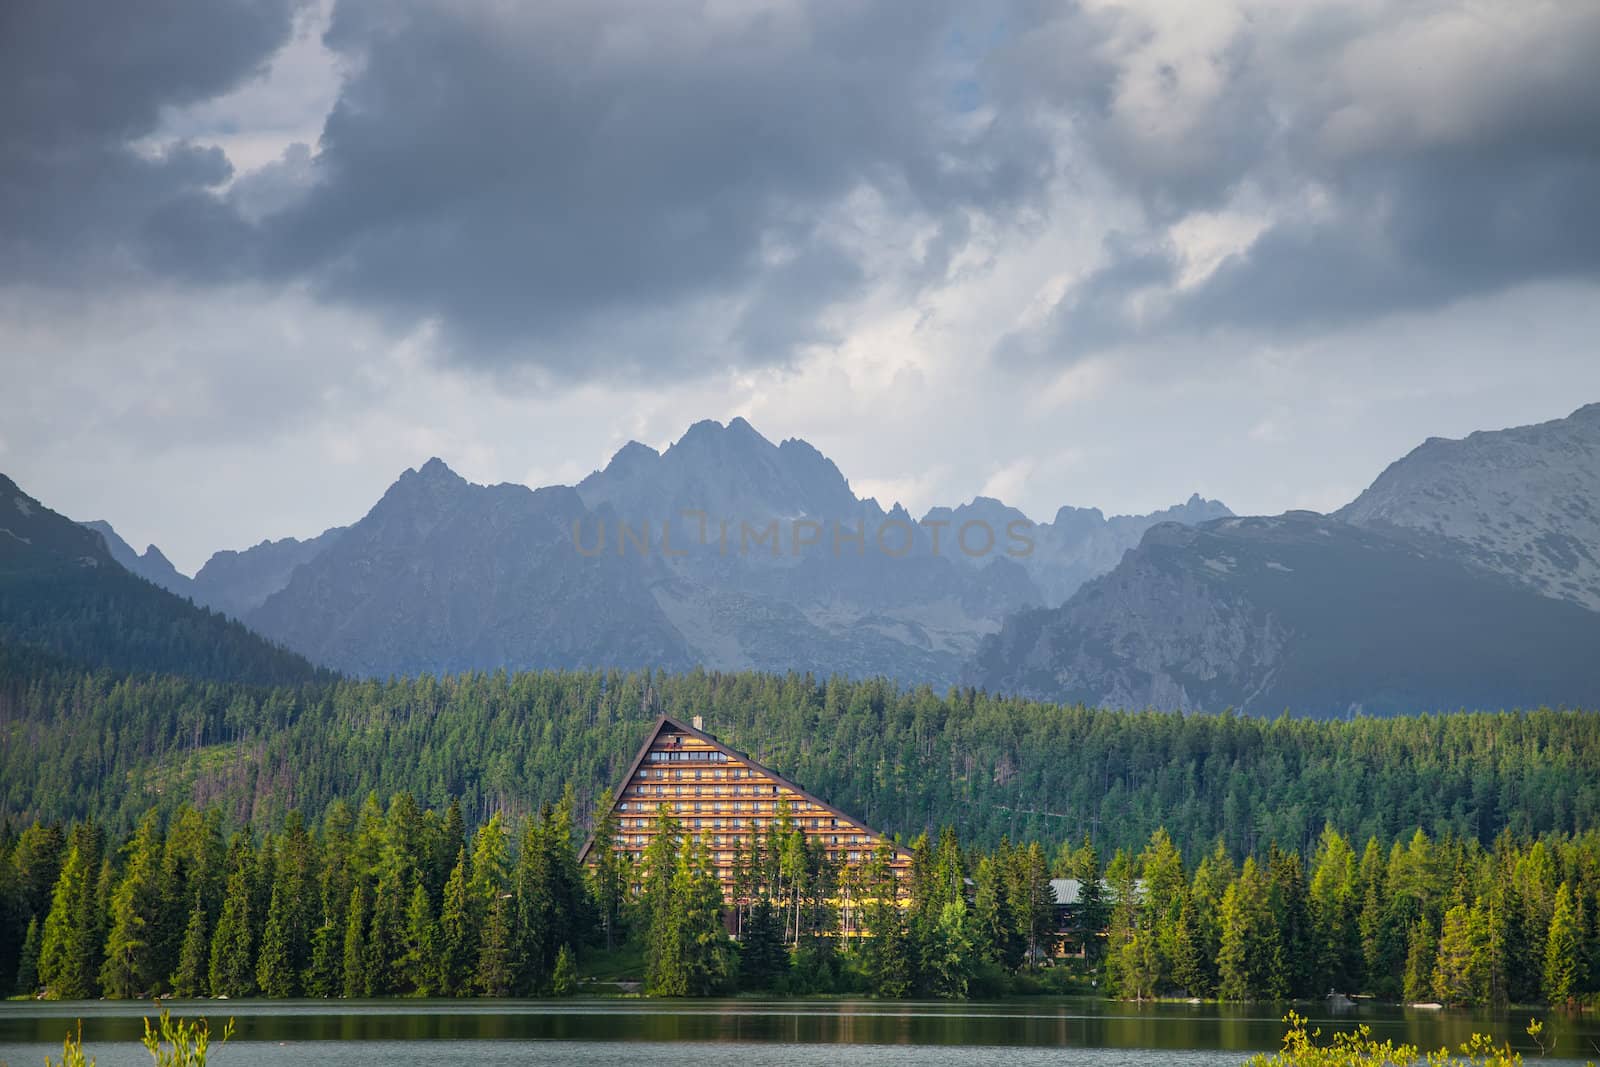 Mountain lake in National Park High Tatra. Strbske pleso, Slovakia, Europe